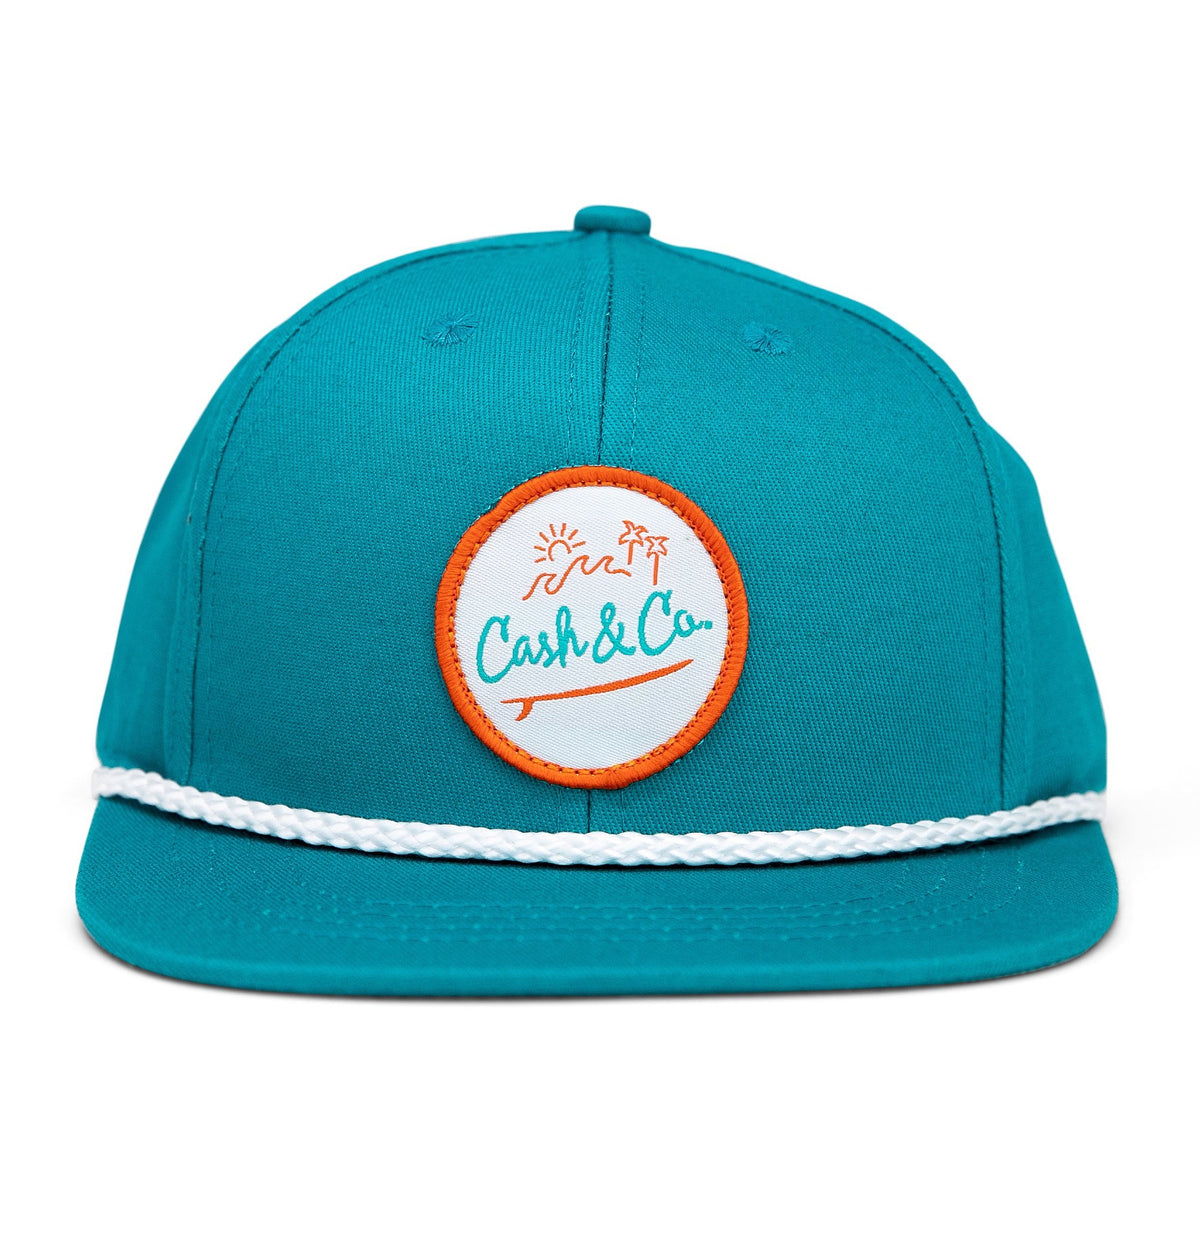 Cash & Co Baseball Hat- The Kahuna